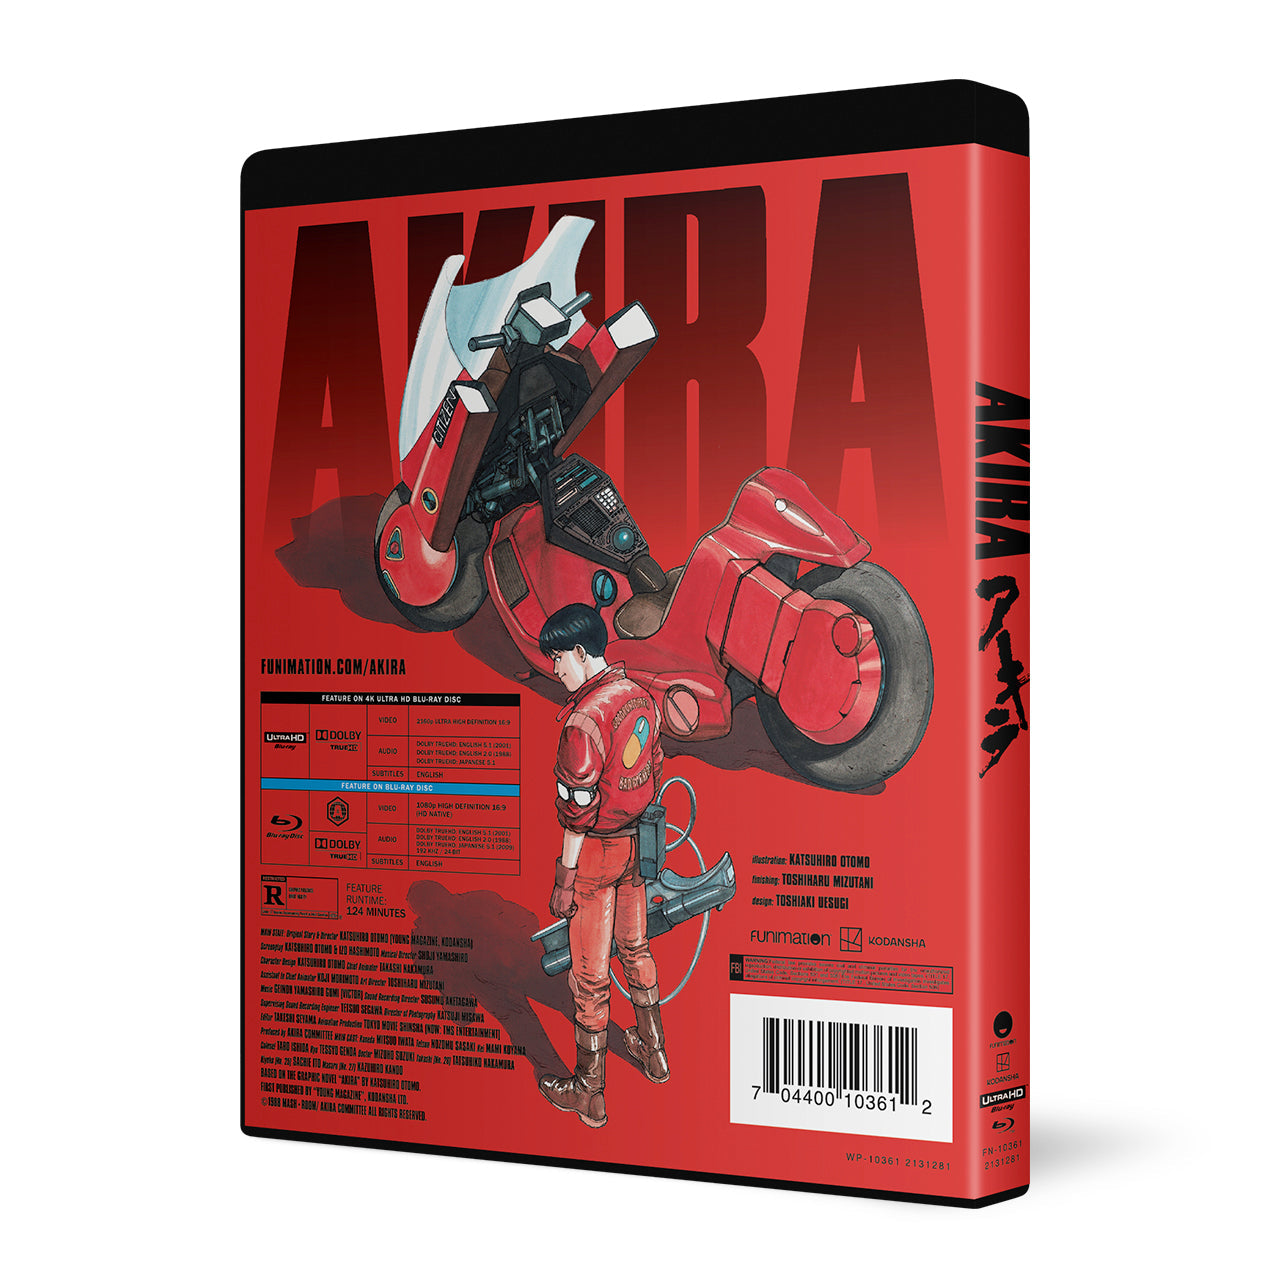 Akira - Movie - 4K + Blu-ray image count 1